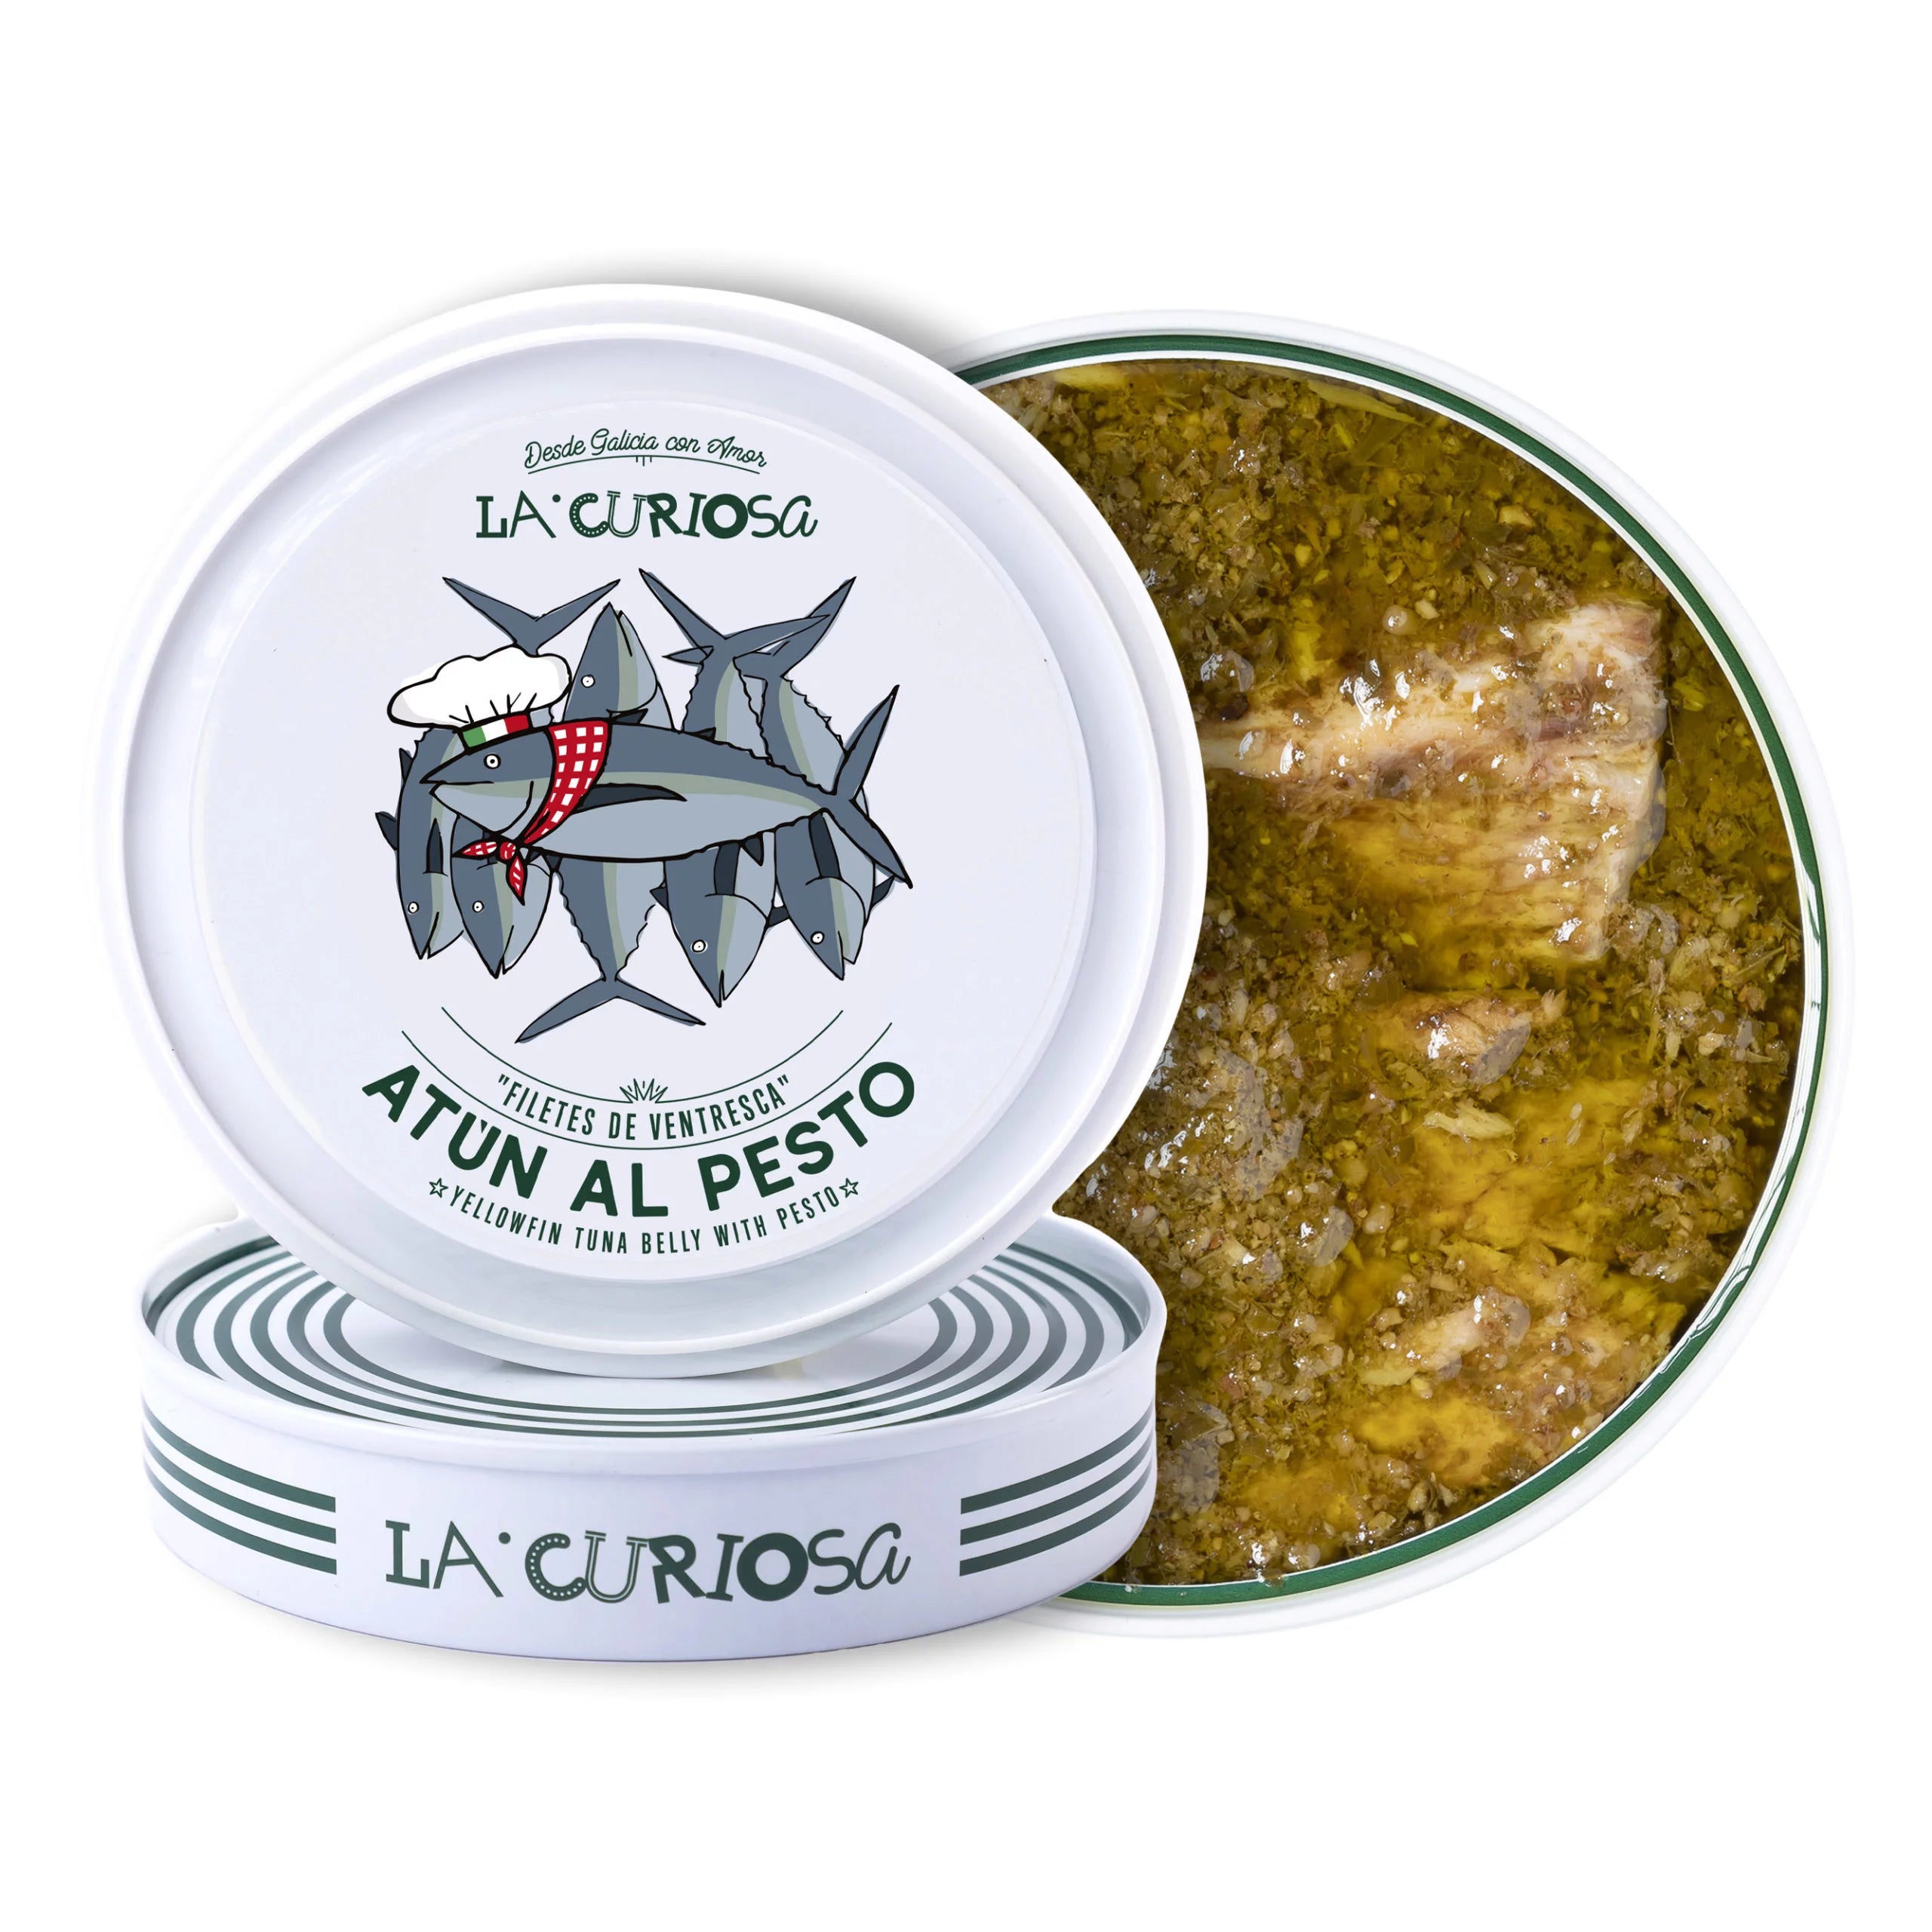 La Curiosa Tunabelly Fillets with Pesto